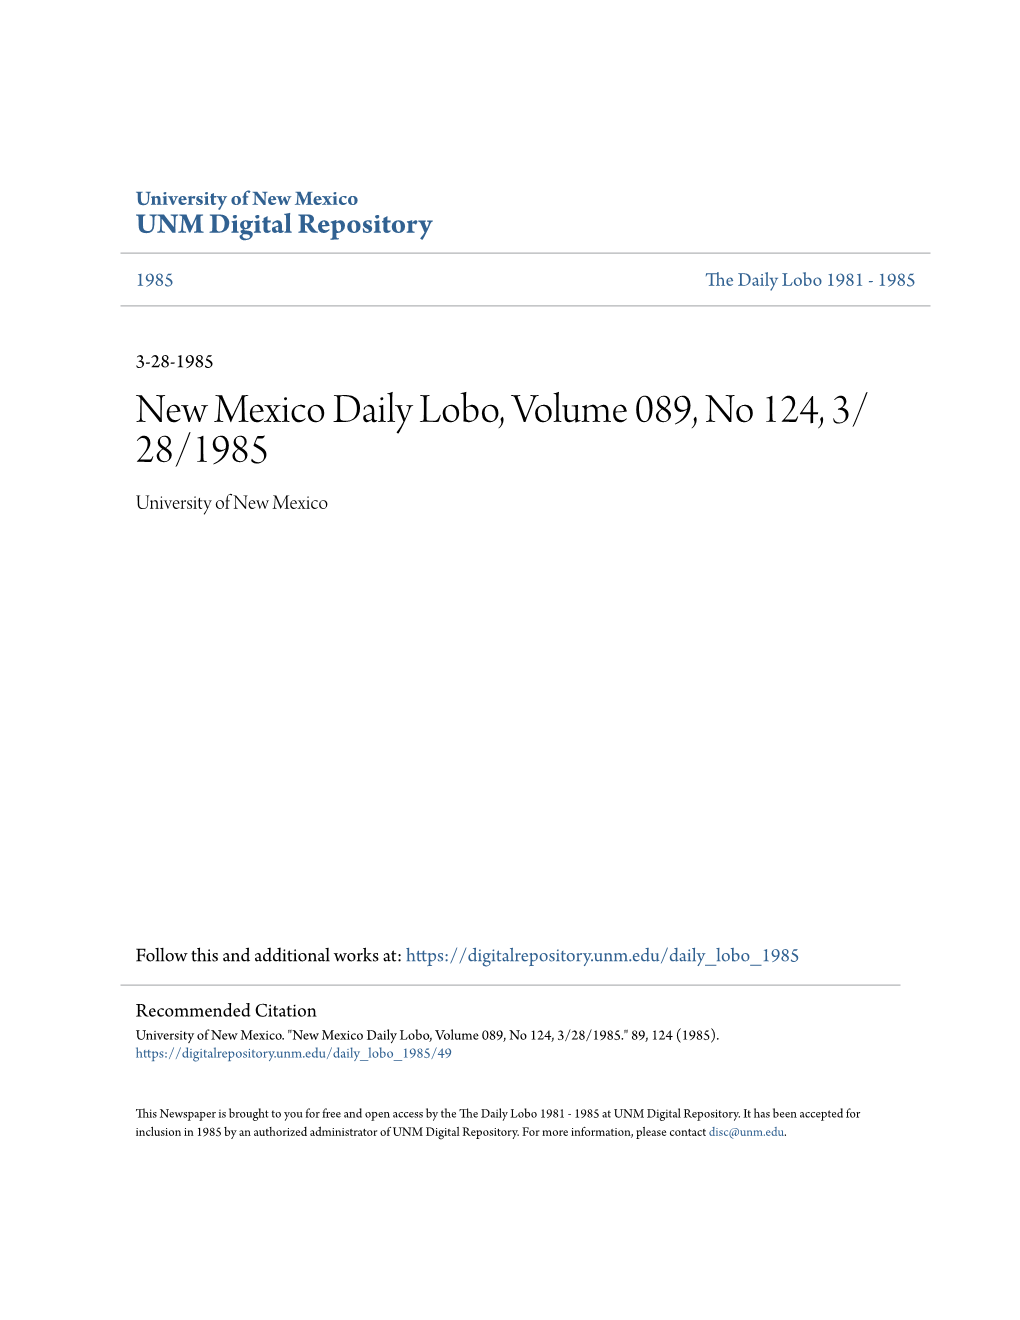 New Mexico Daily Lobo, Volume 089, No 124, 3/28/1985." 89, 124 (1985)